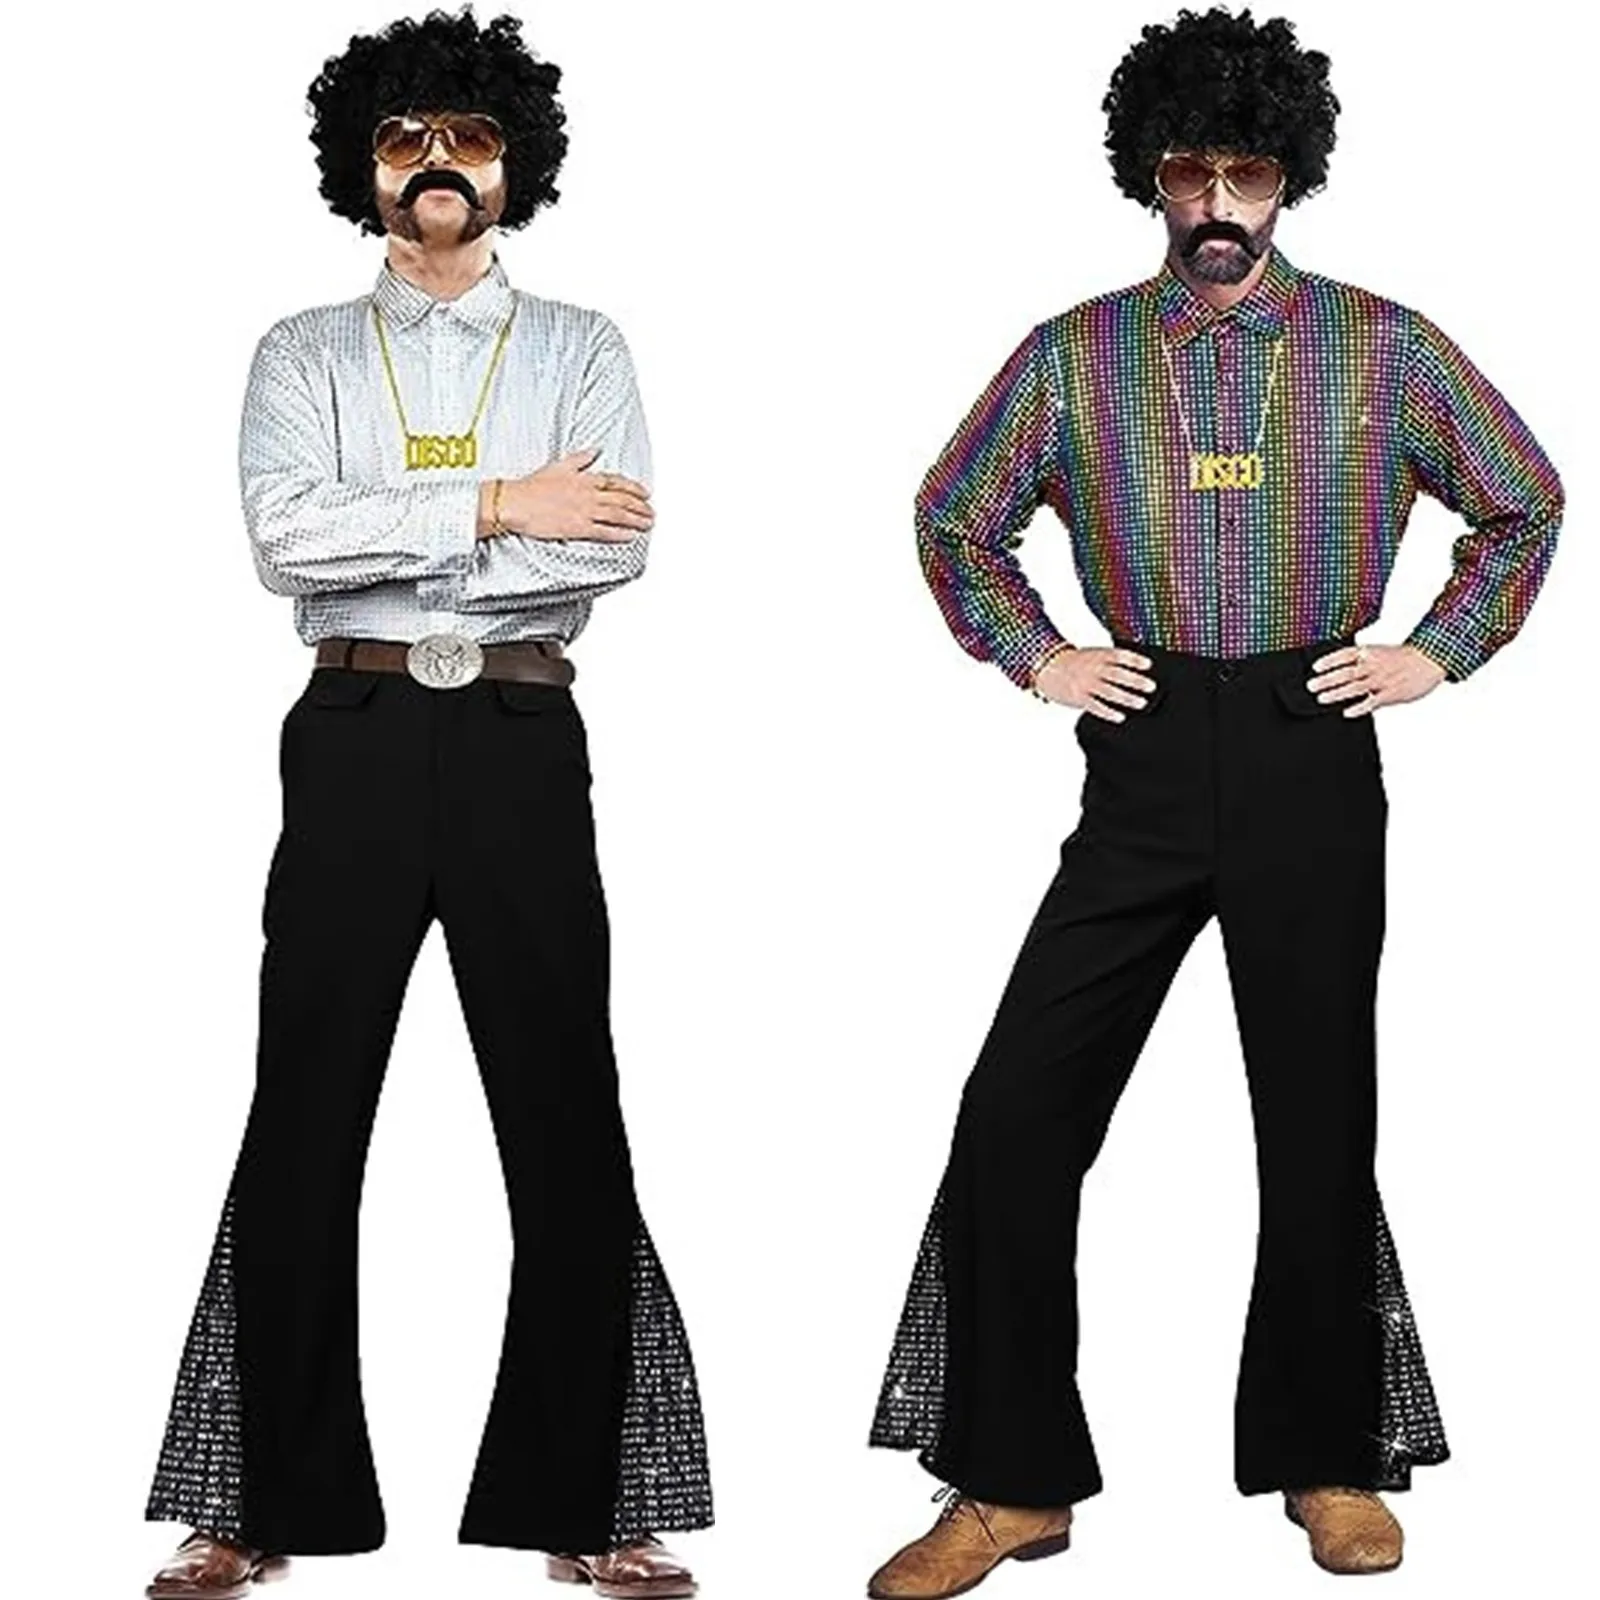 

Брюки-клеш в стиле ретро для мужчин, винтажный костюм для Хэллоуина, карнавала, дискотеки, с блестками на подоле, 60-х годов